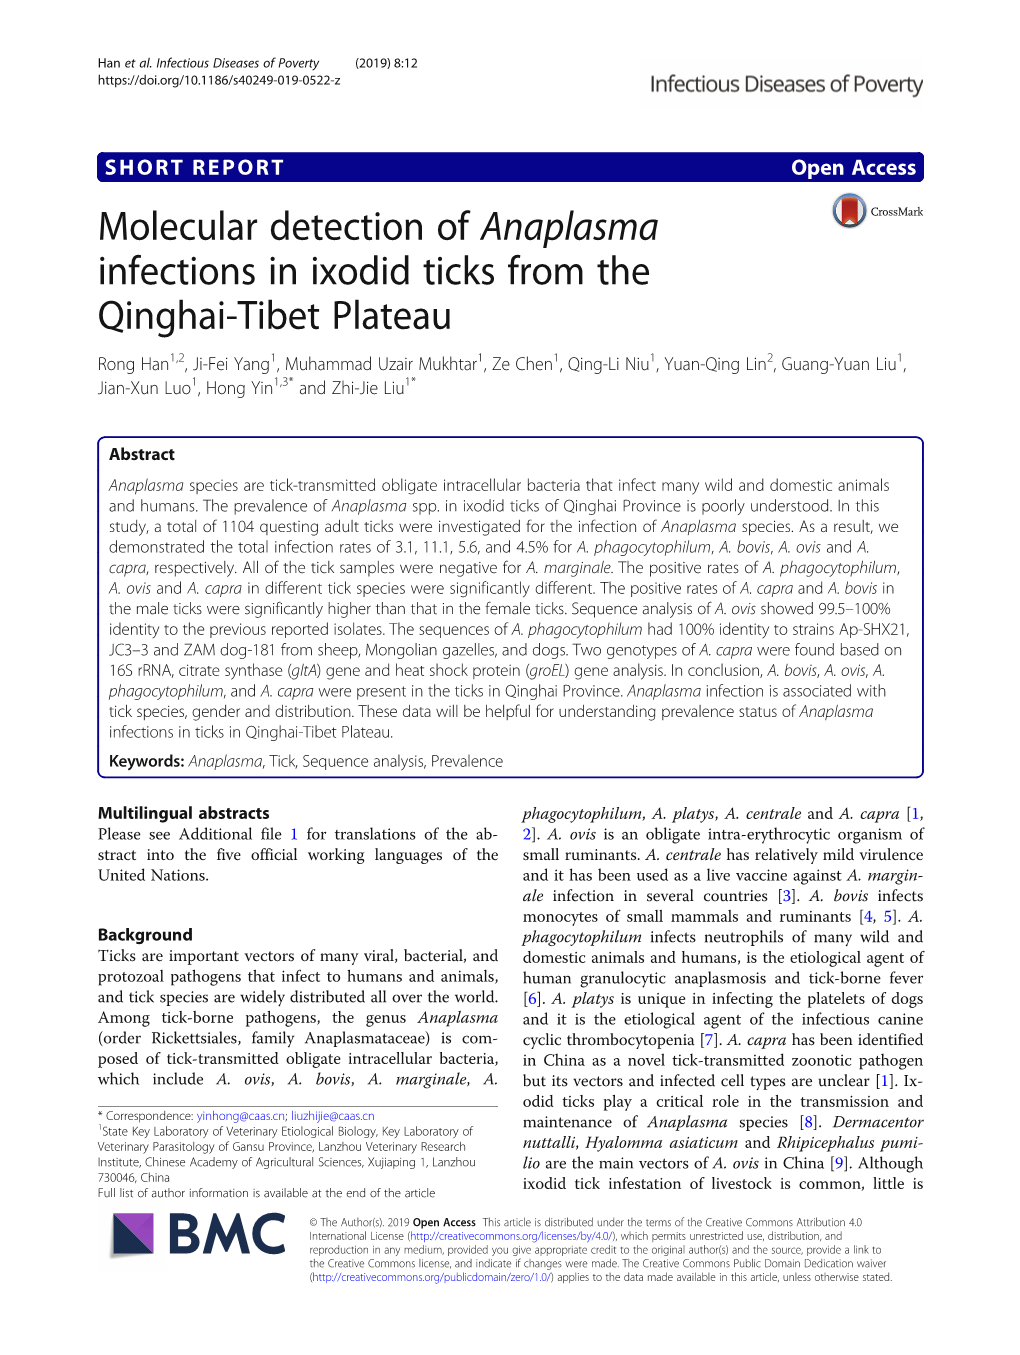 Molecular Detection of Anaplasma